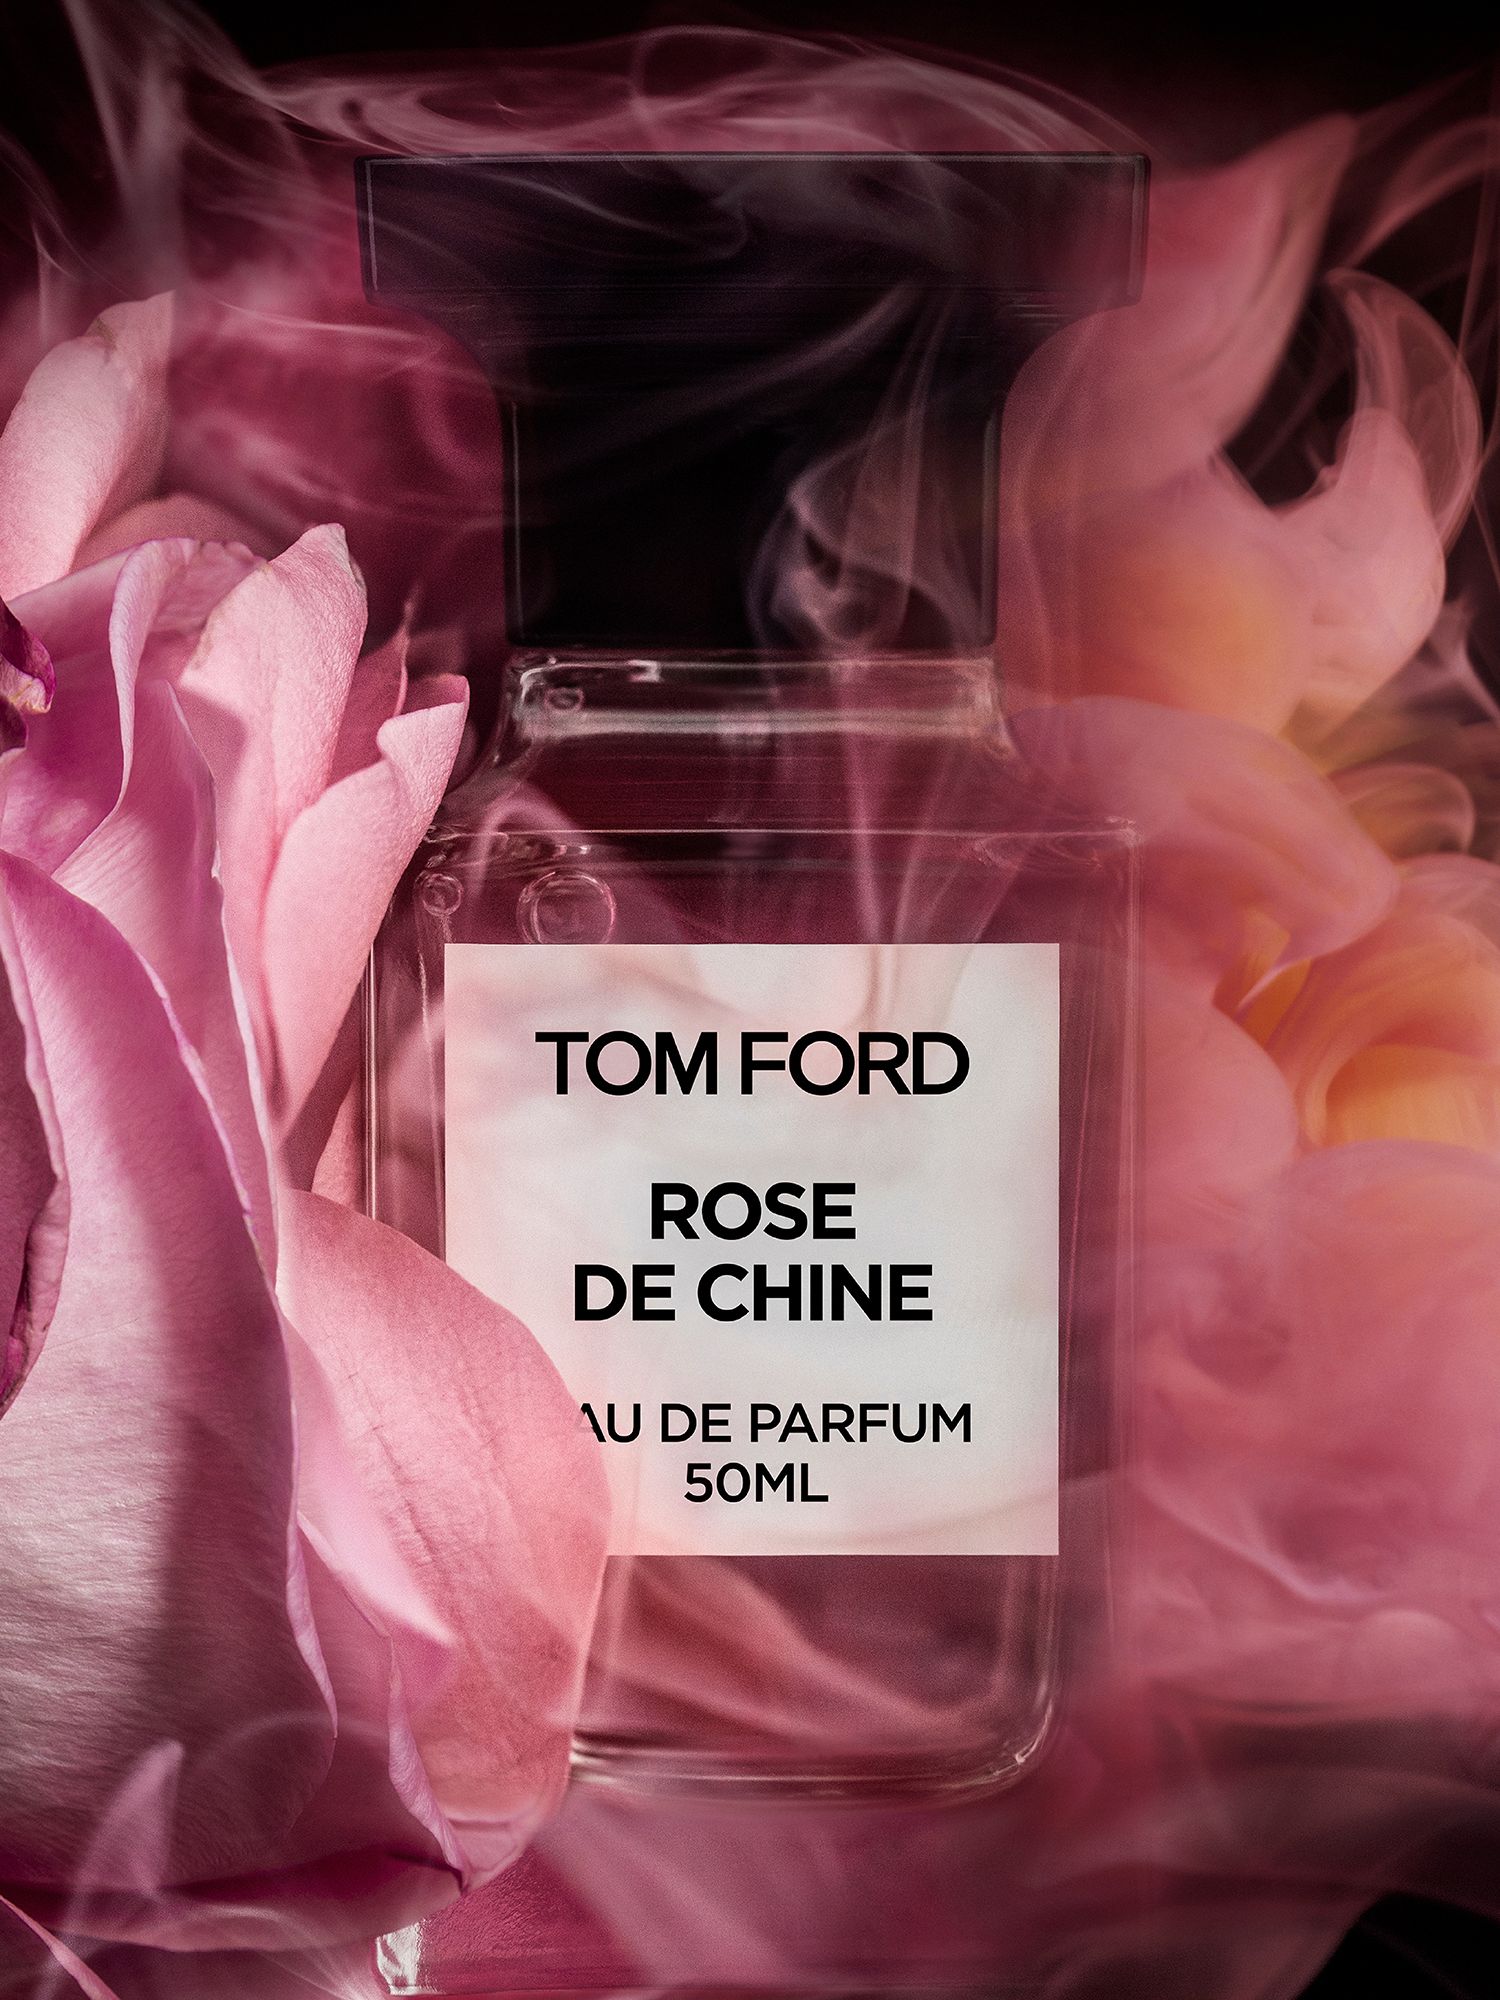 TOM FORD Private Rose Garden Rose De Chine Eau de Parfum, 50ml at John ...